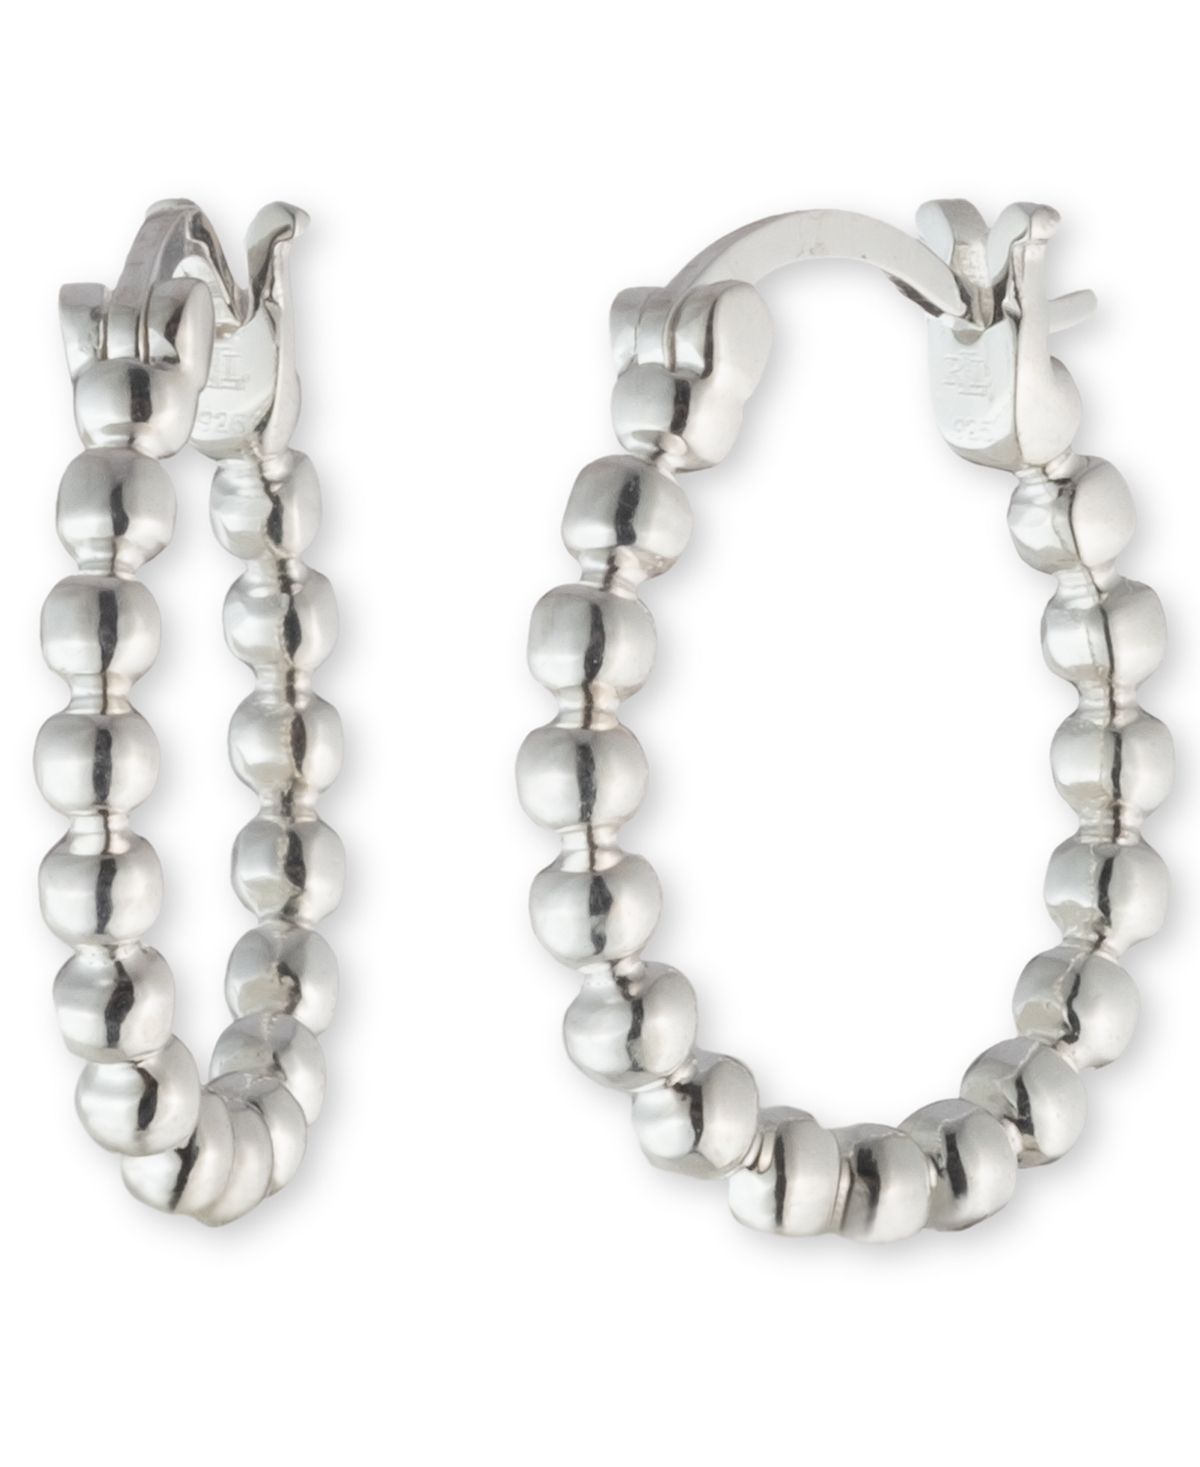 Lauren Ralph Lauren Small Beaded Hoop Earrings in Sterling Silver, 0.63" - Silver